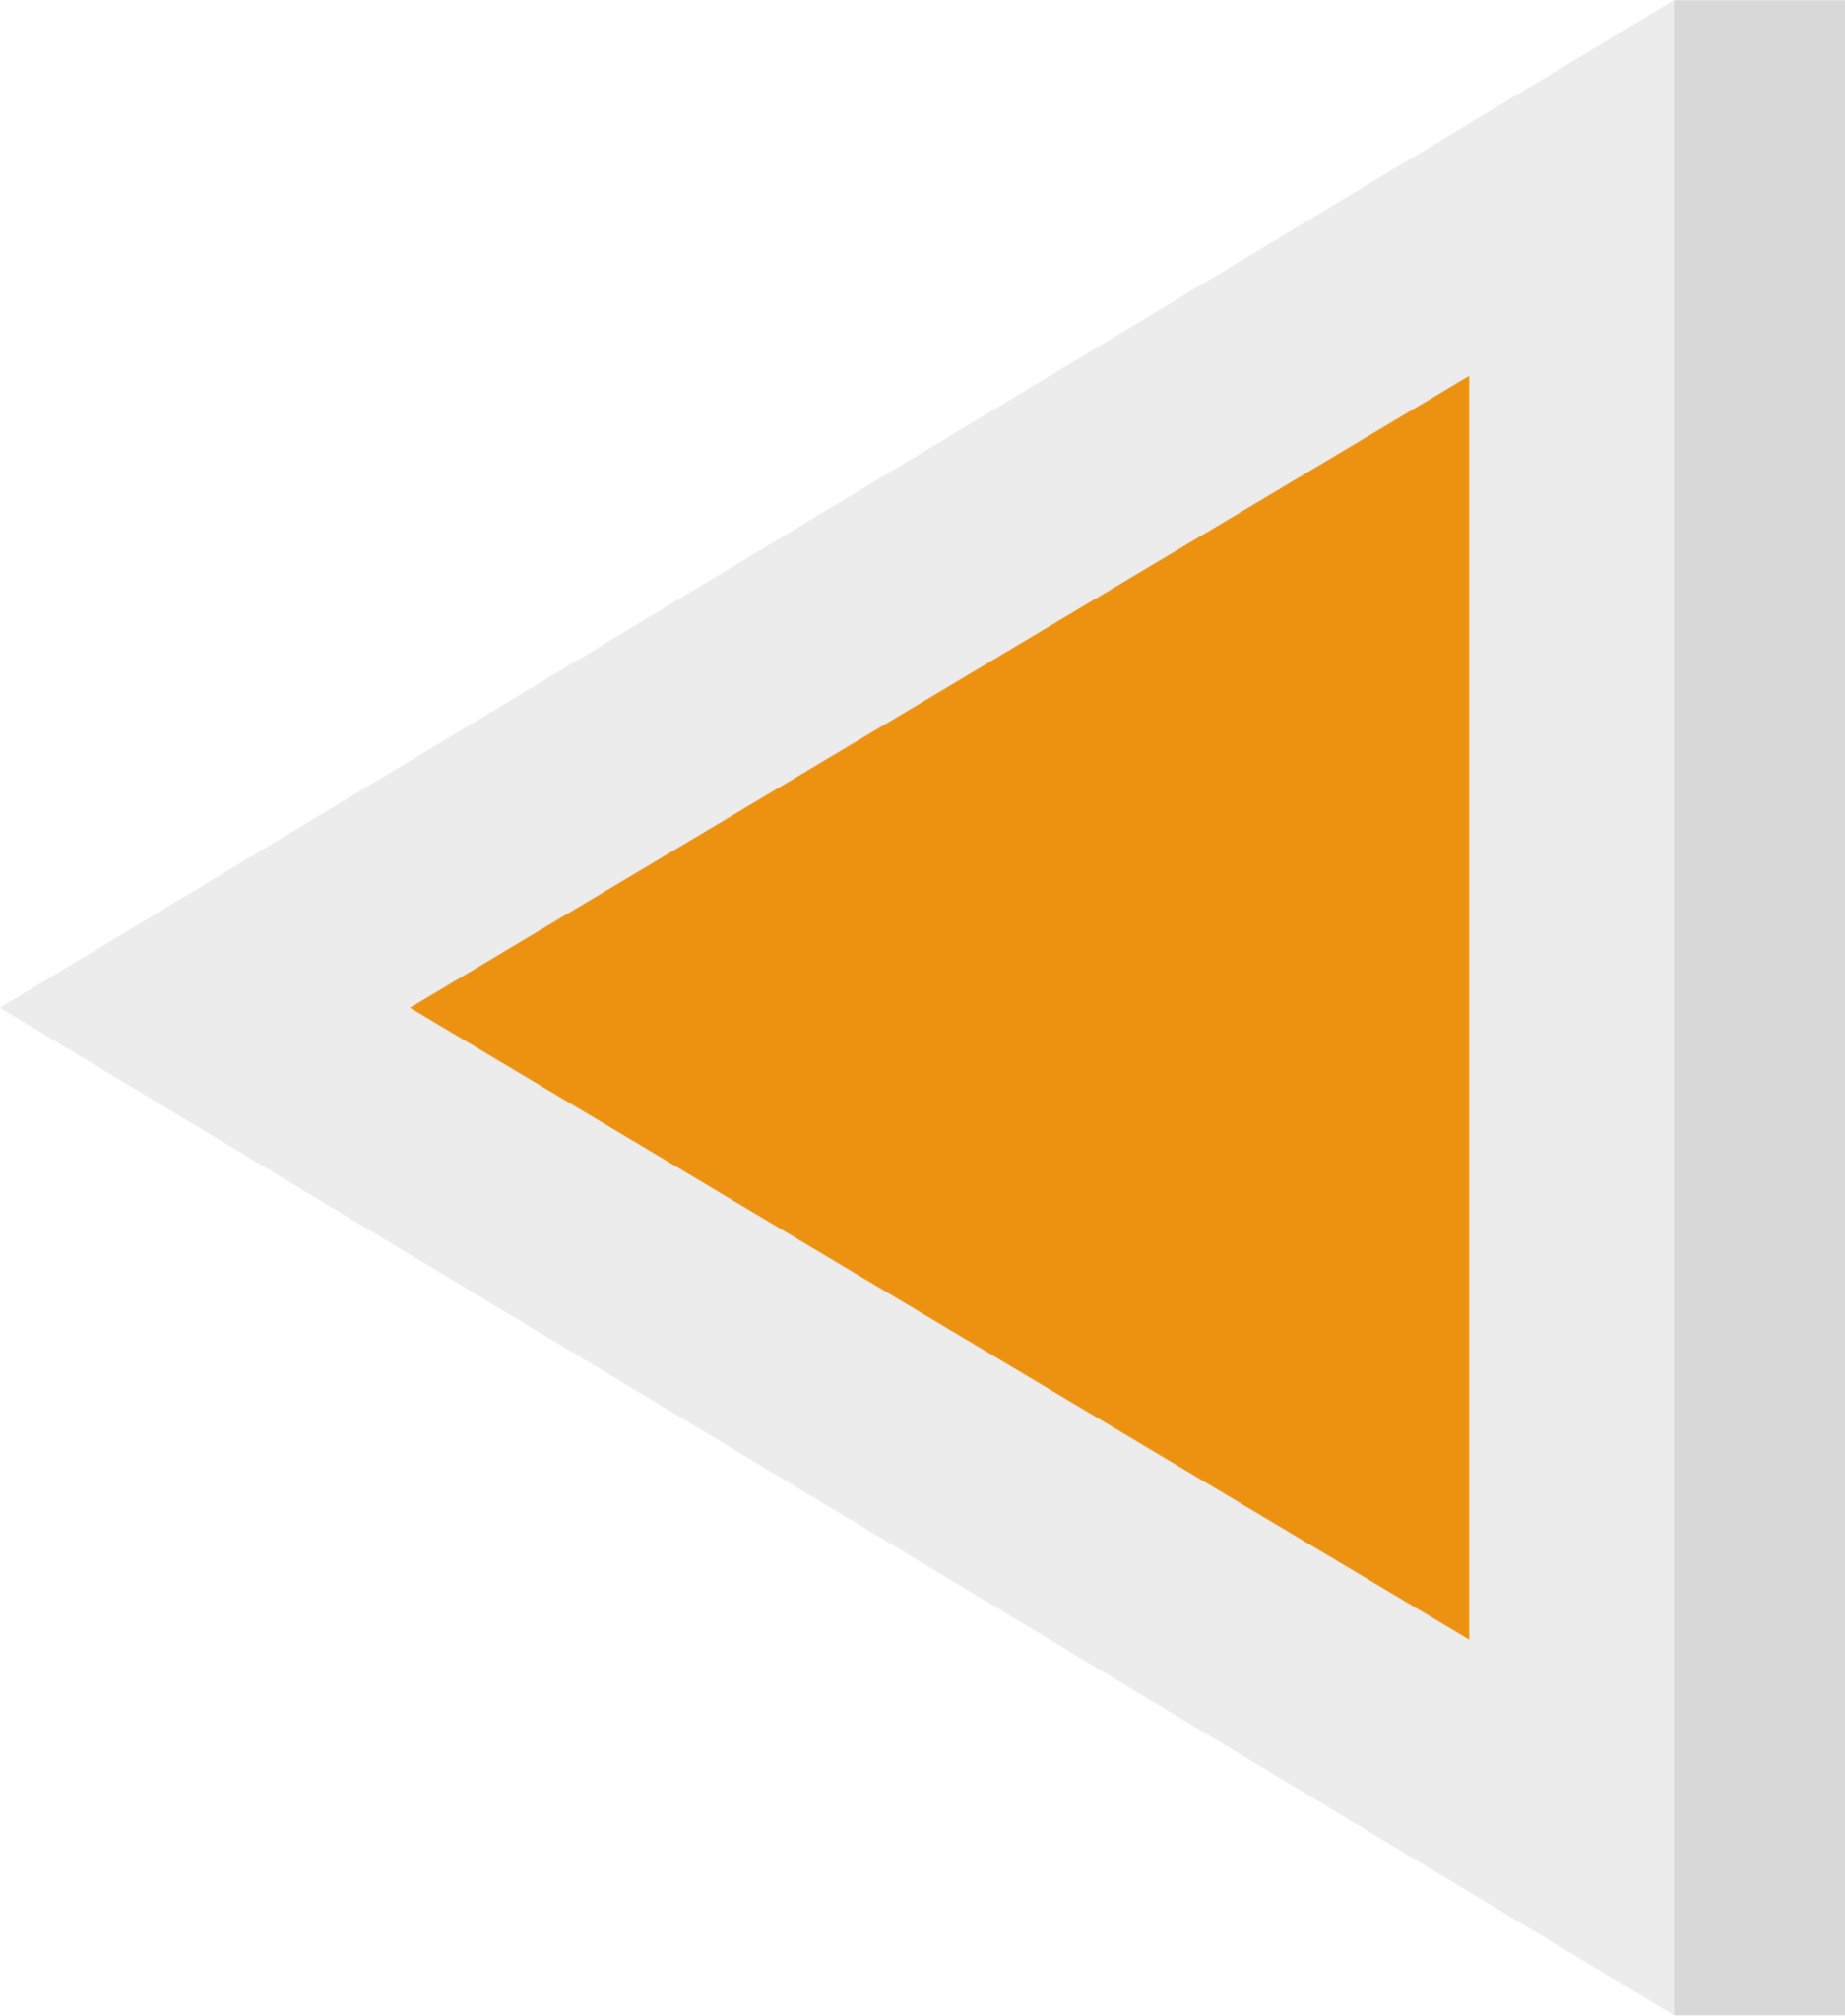 triangle left icon